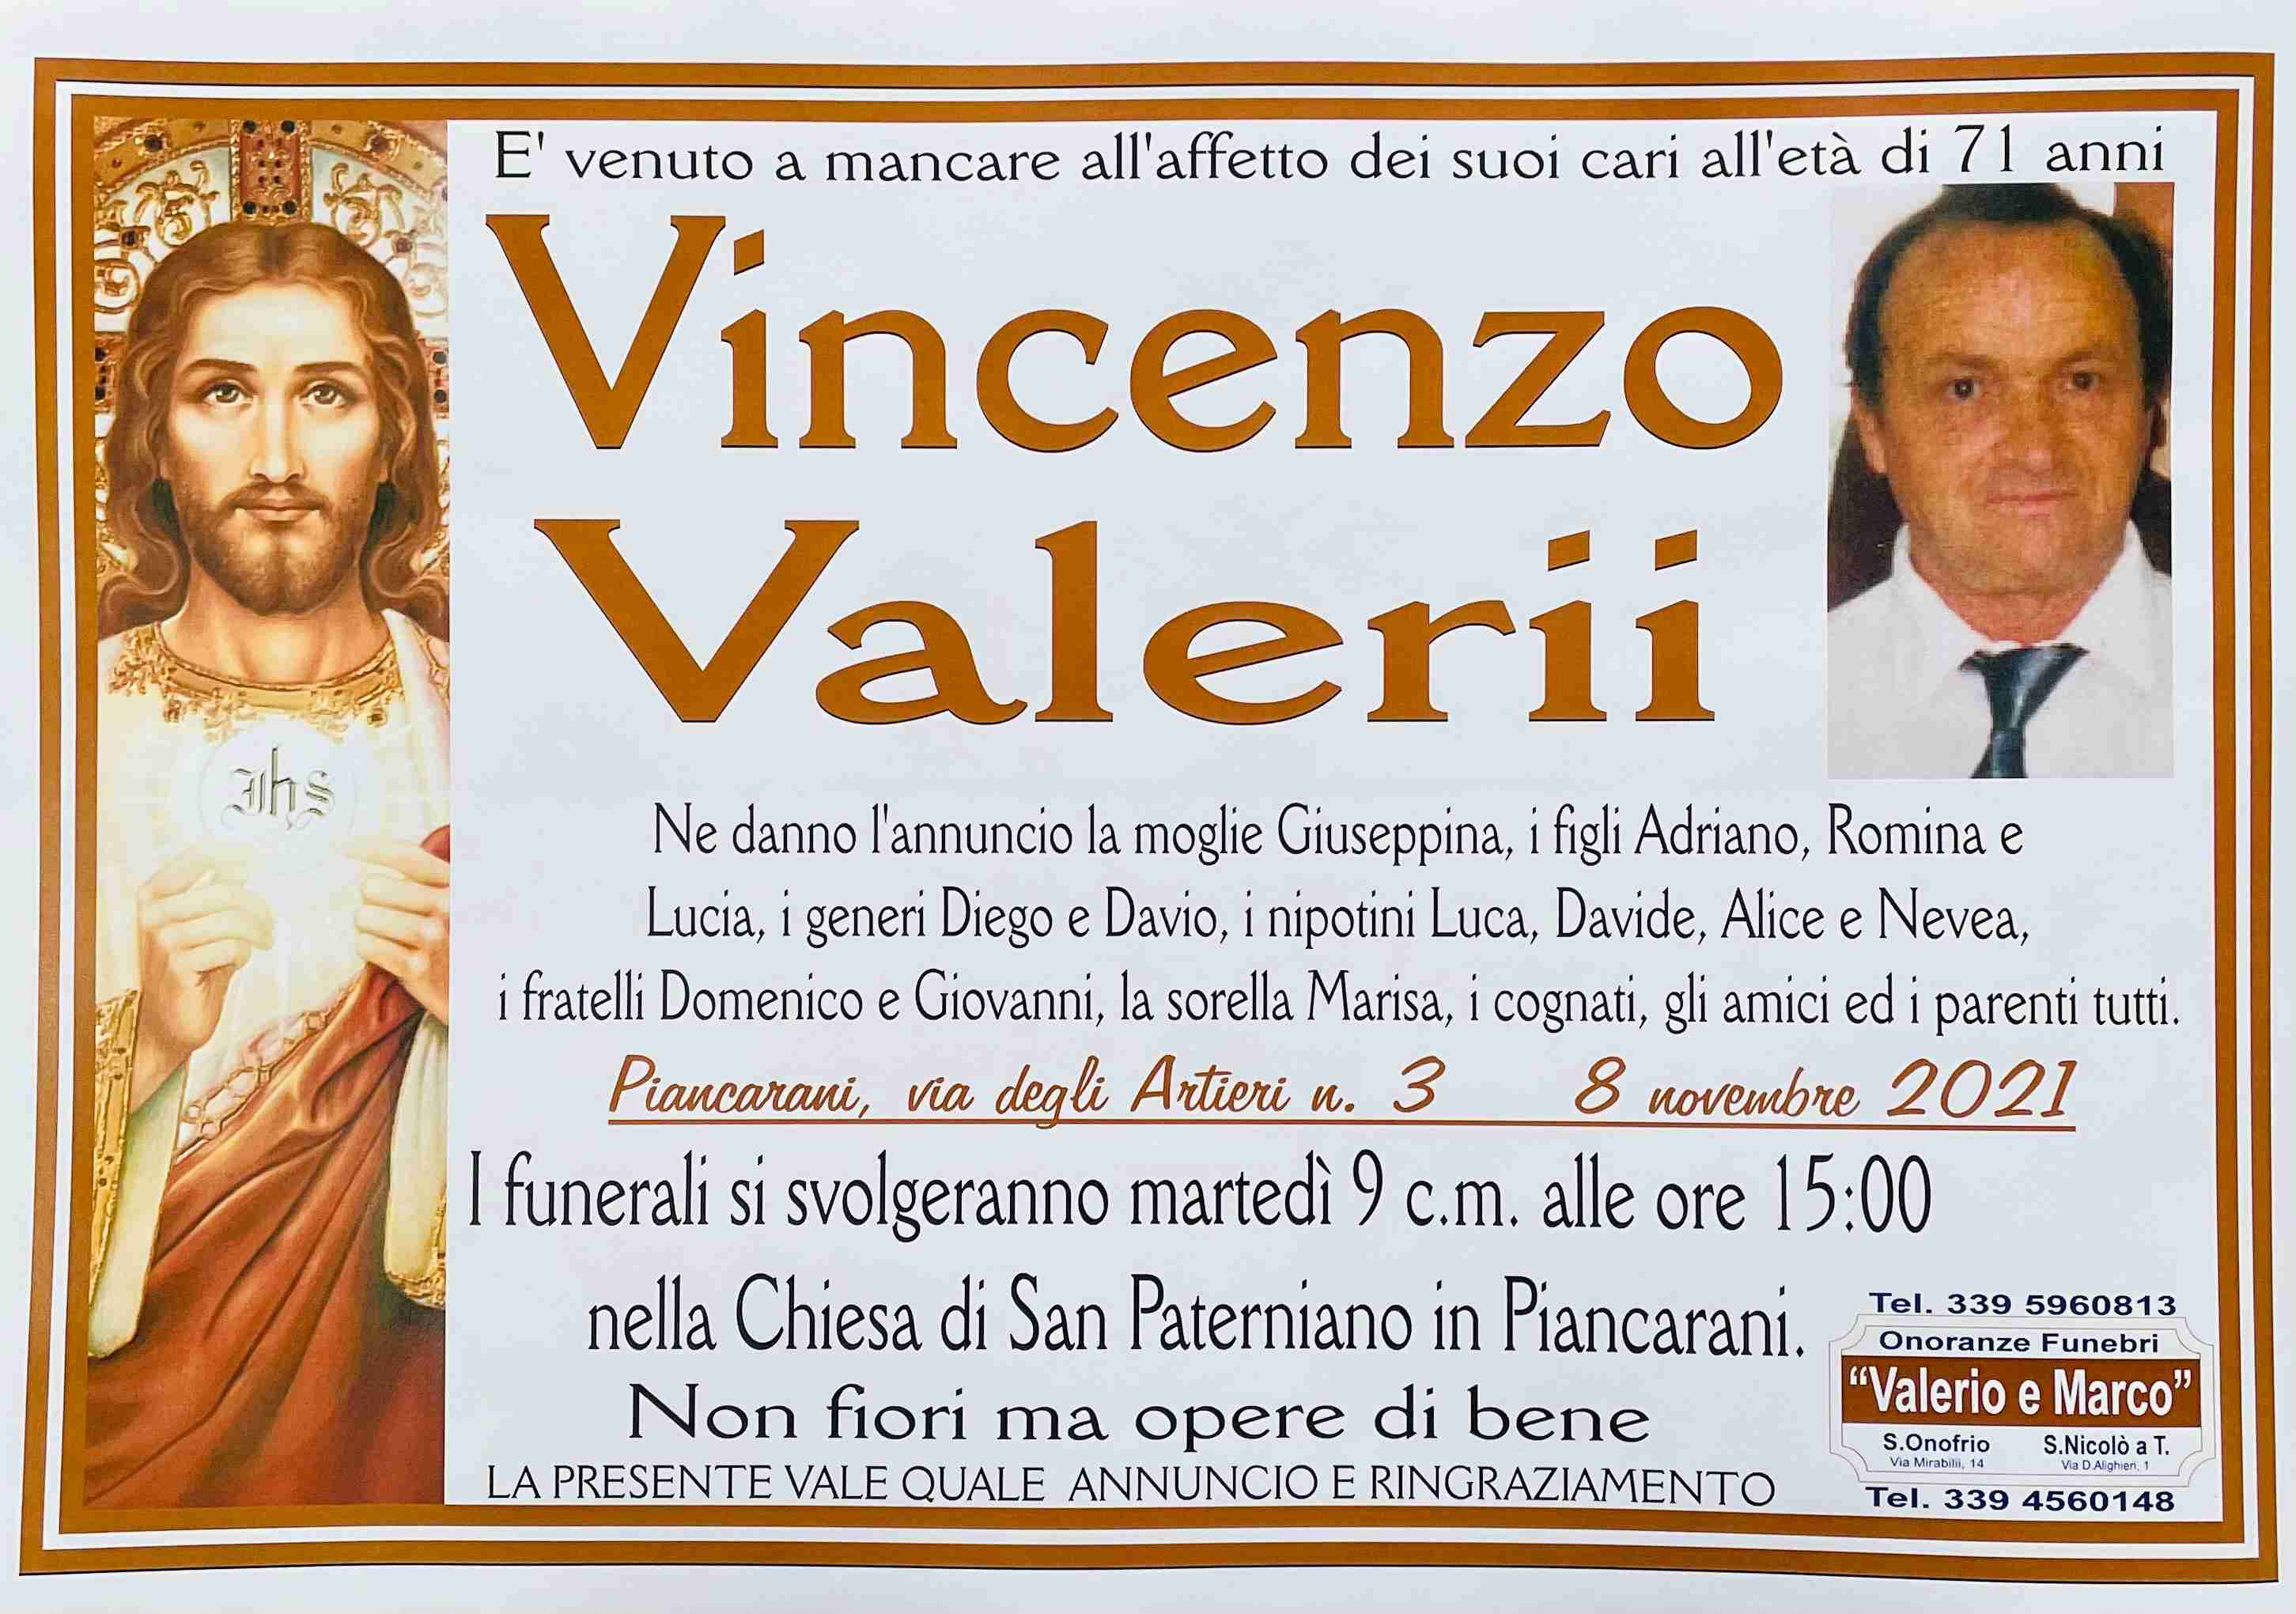 Vincenzo Valerii